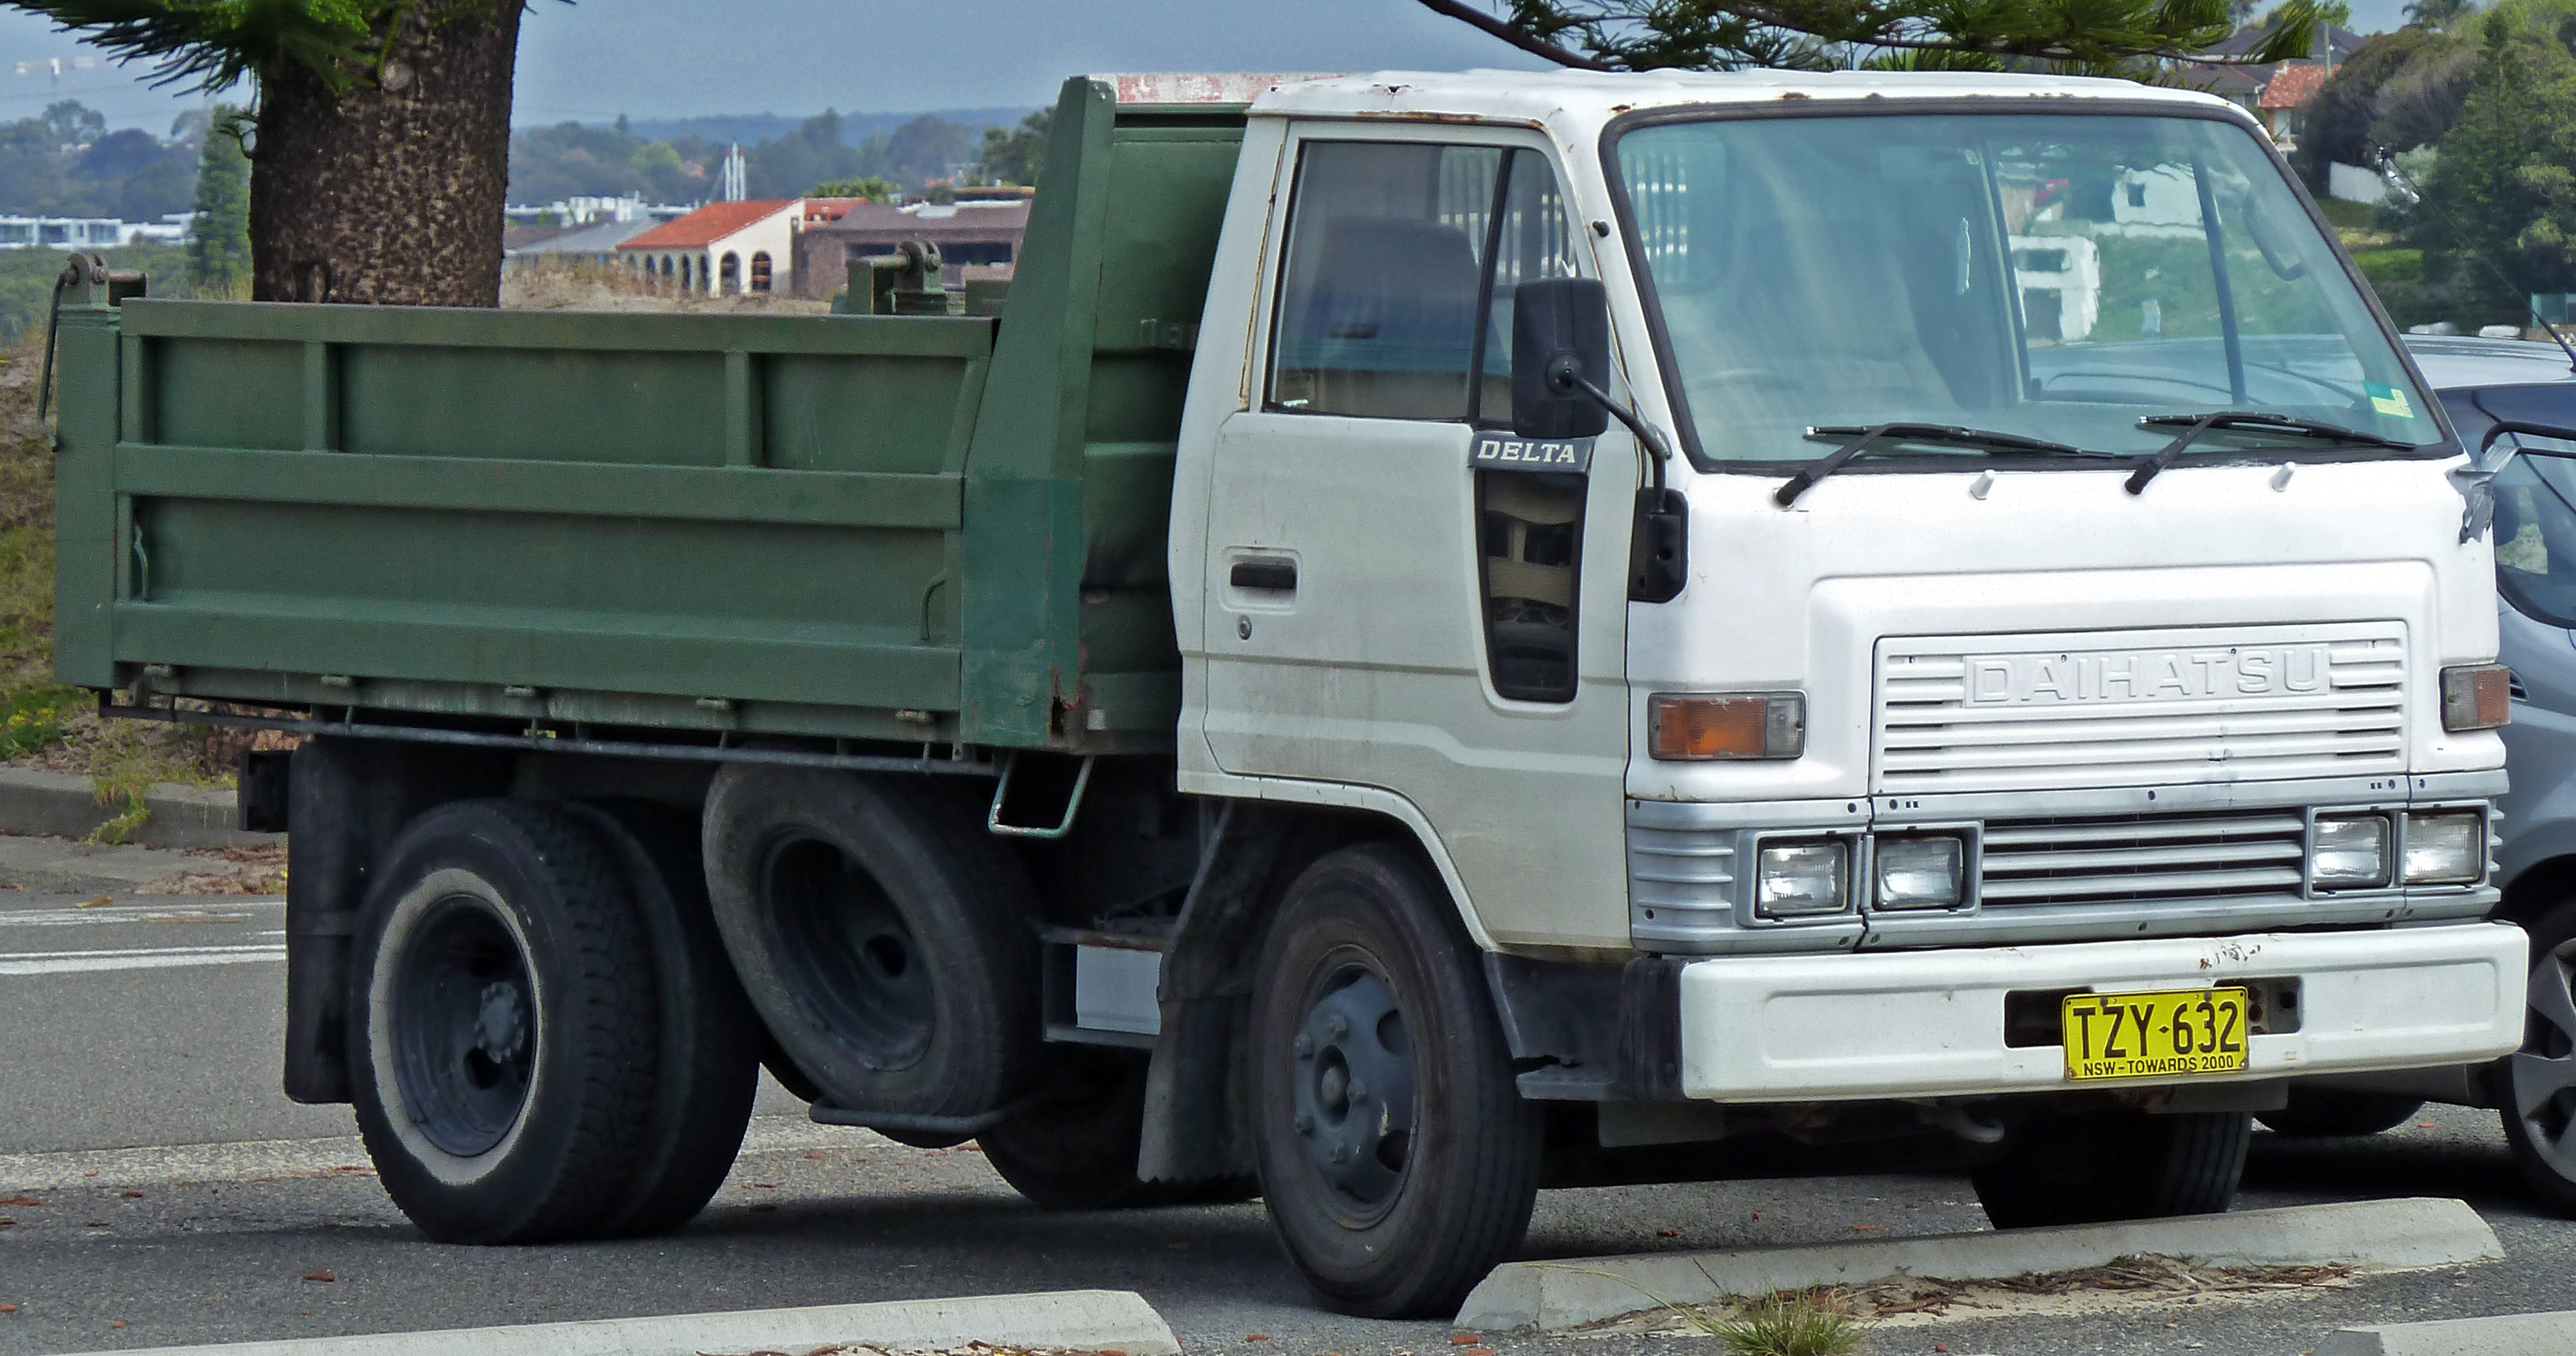 Fichier: Camion Daihatsu Delta 2 portes 01.jpg - Wikimedia Commons